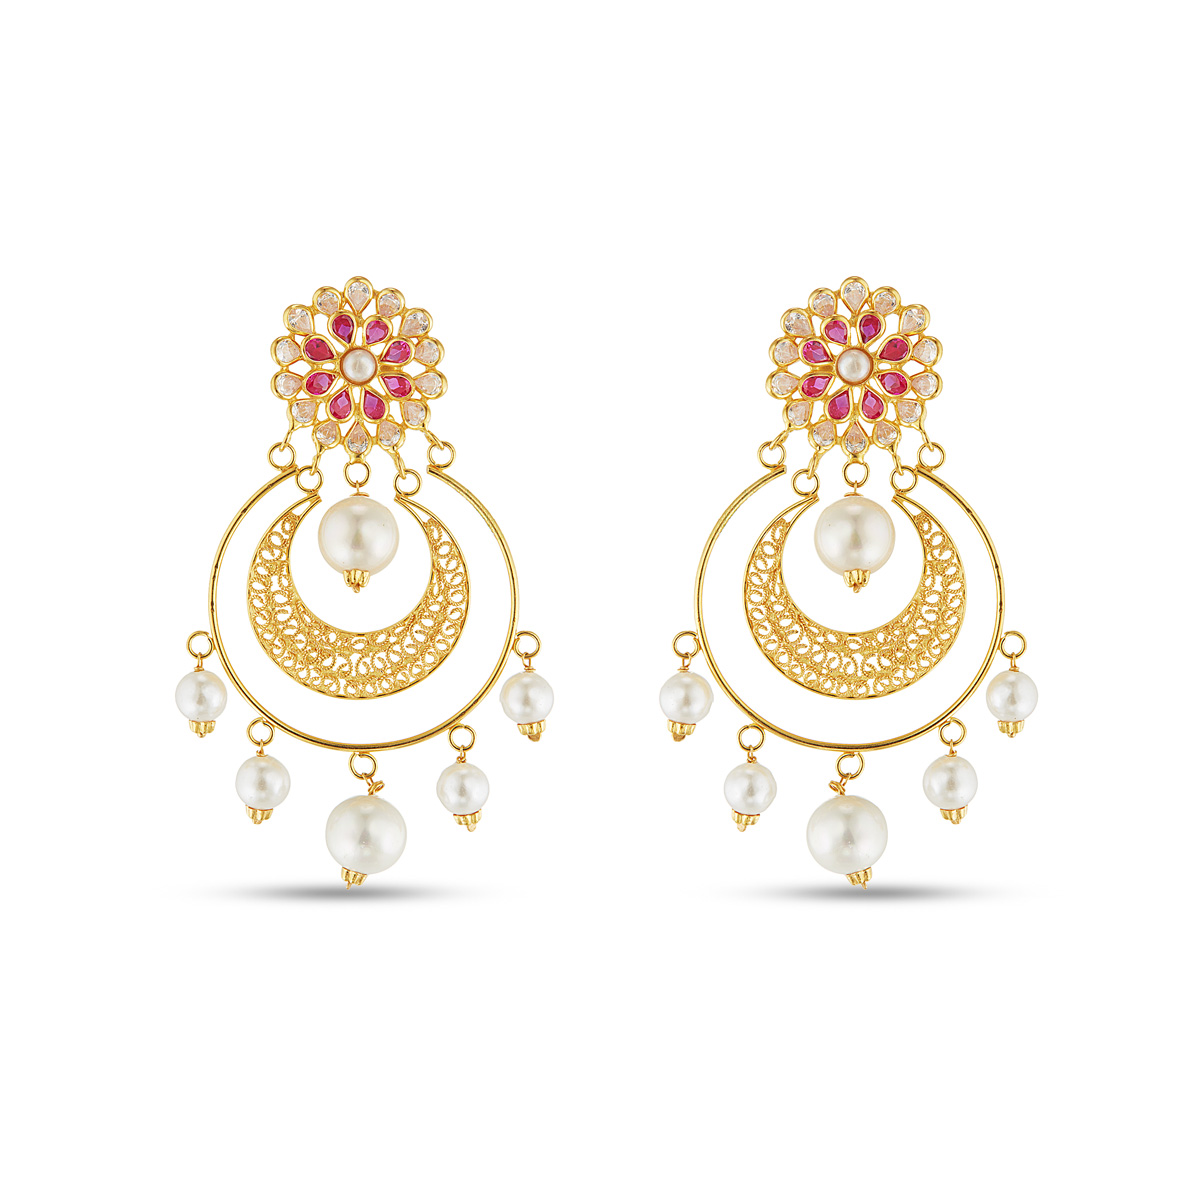 Designer Chandbali Earrings